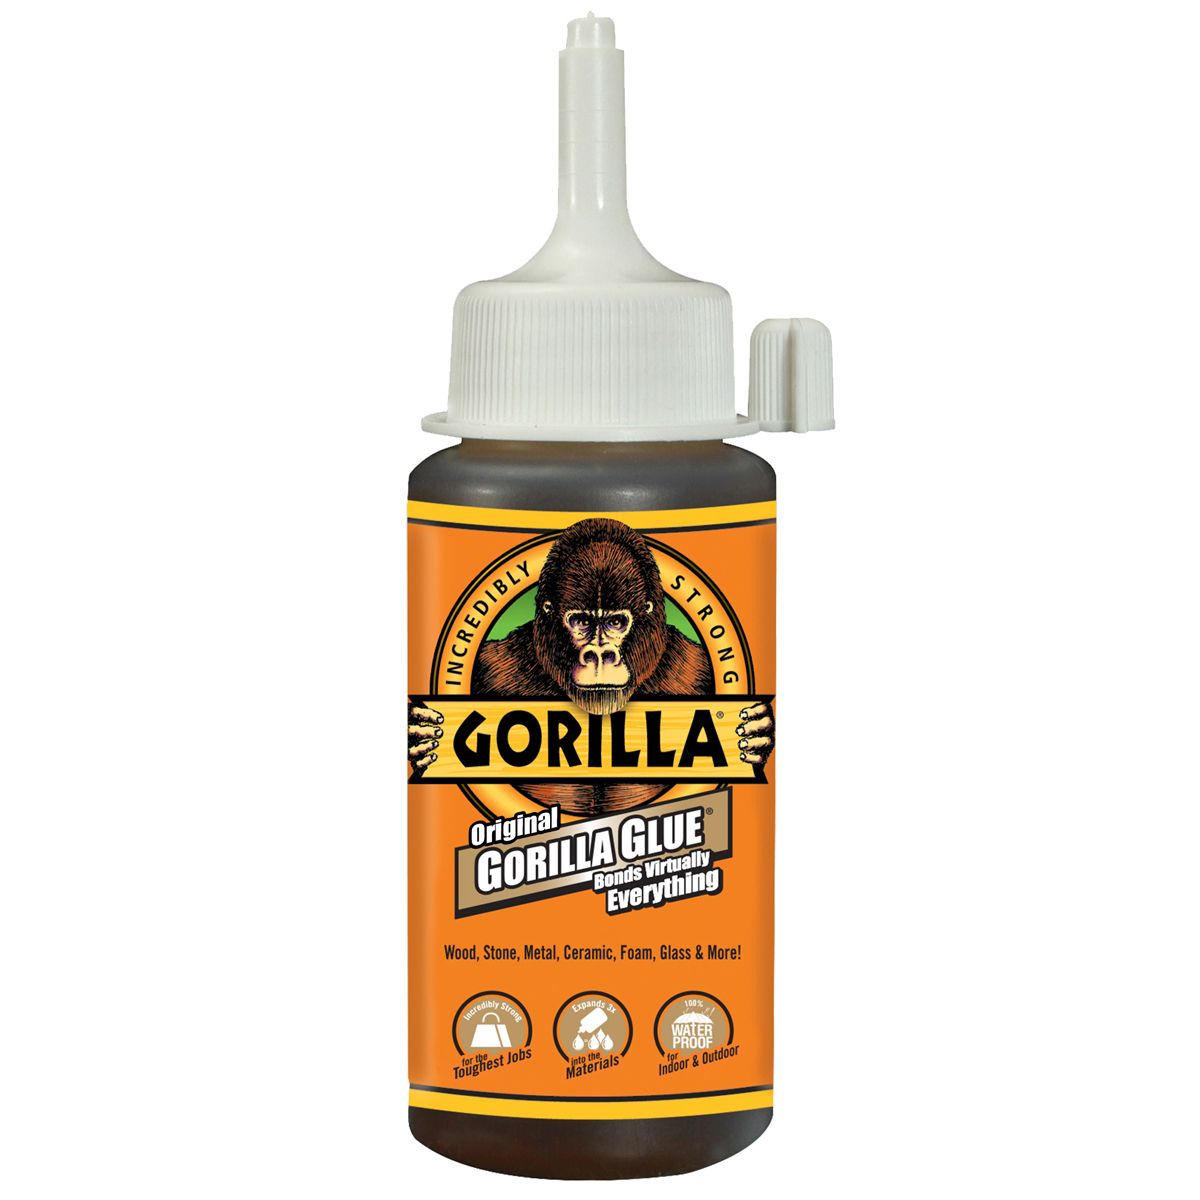 How To Open 4 Oz Gorilla Glue